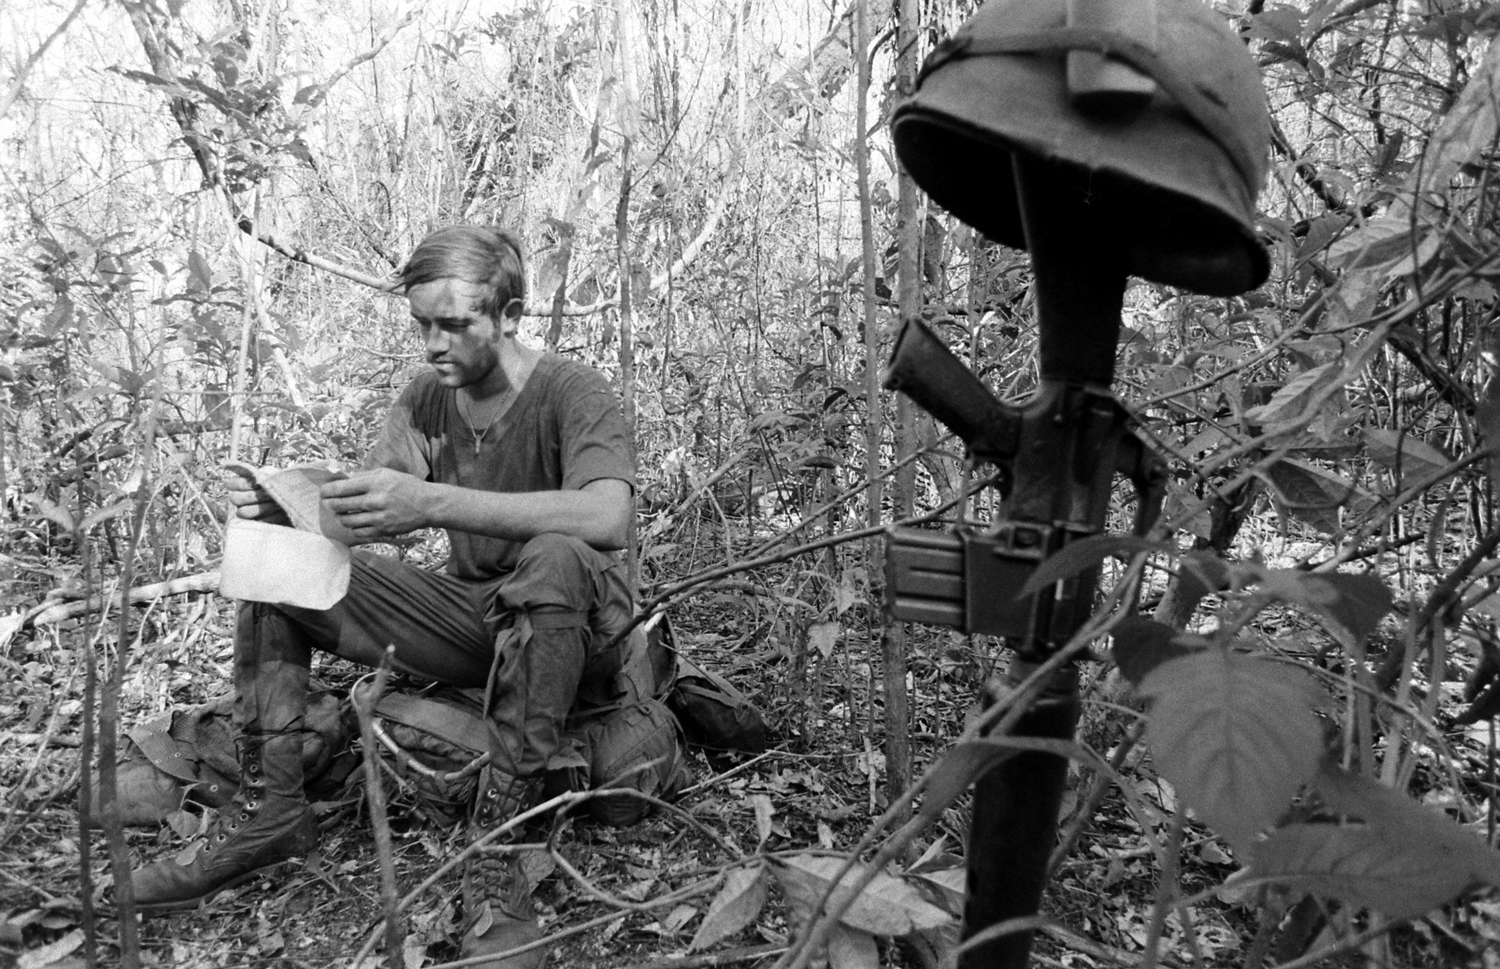 Sgt. Mike Ball, Vietnam, circa 1970.